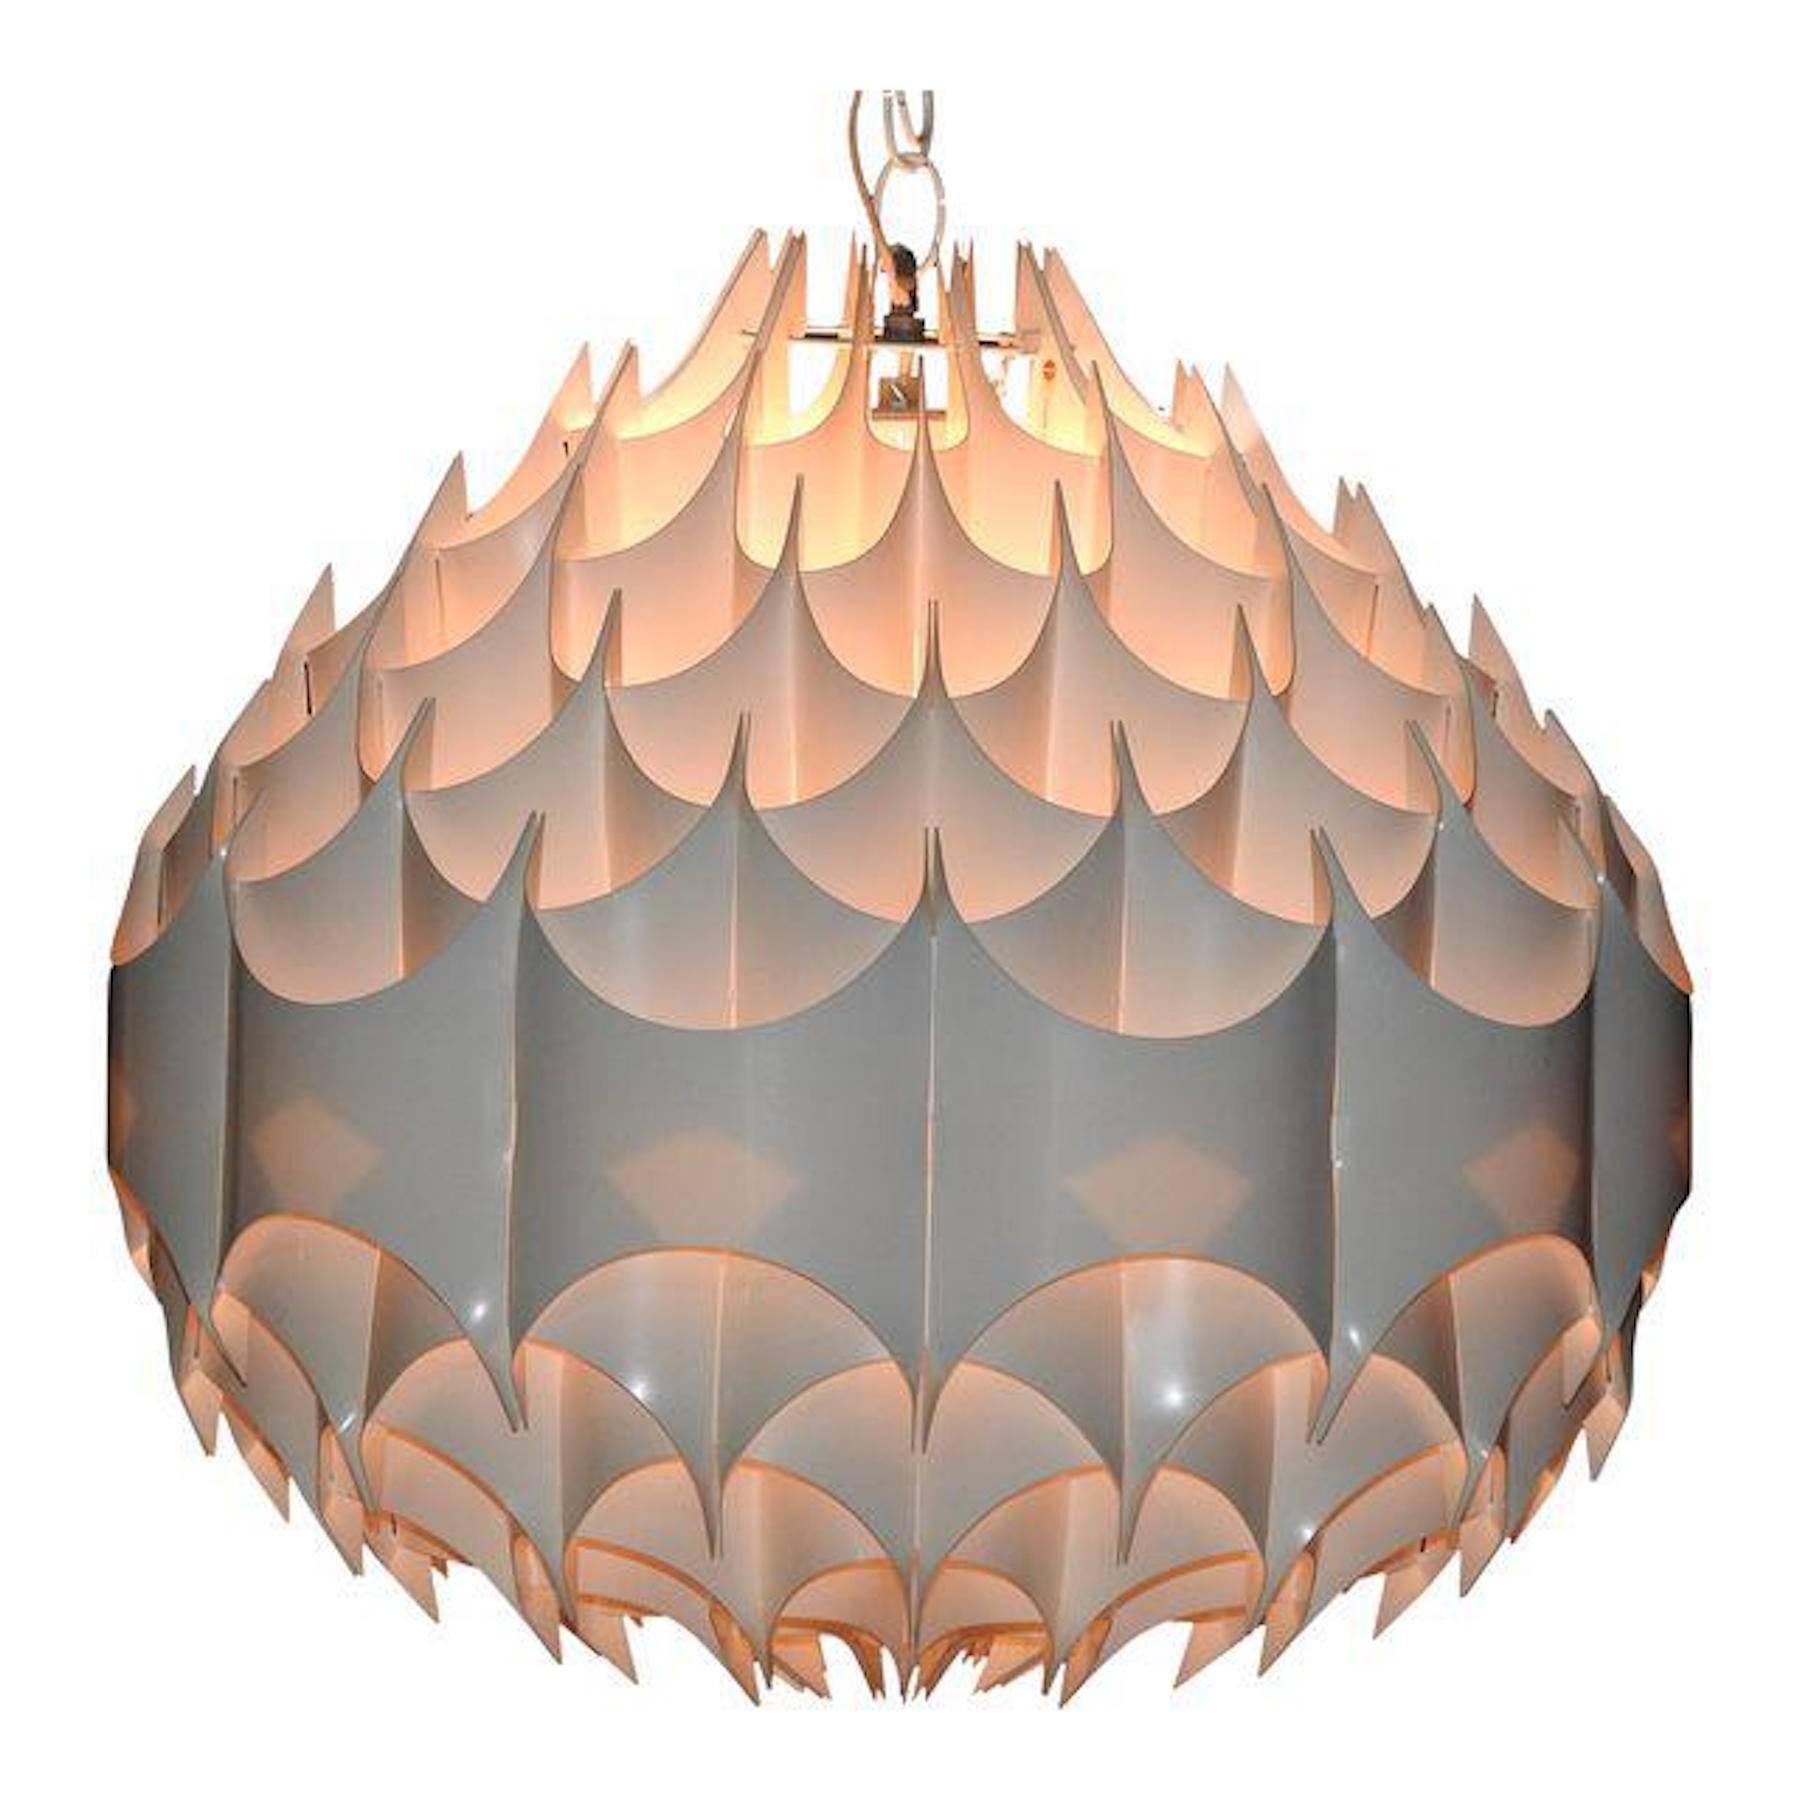 'Rhythmic' globe chandelier. Pendant, designed by Havlova Milanda for Vest.



